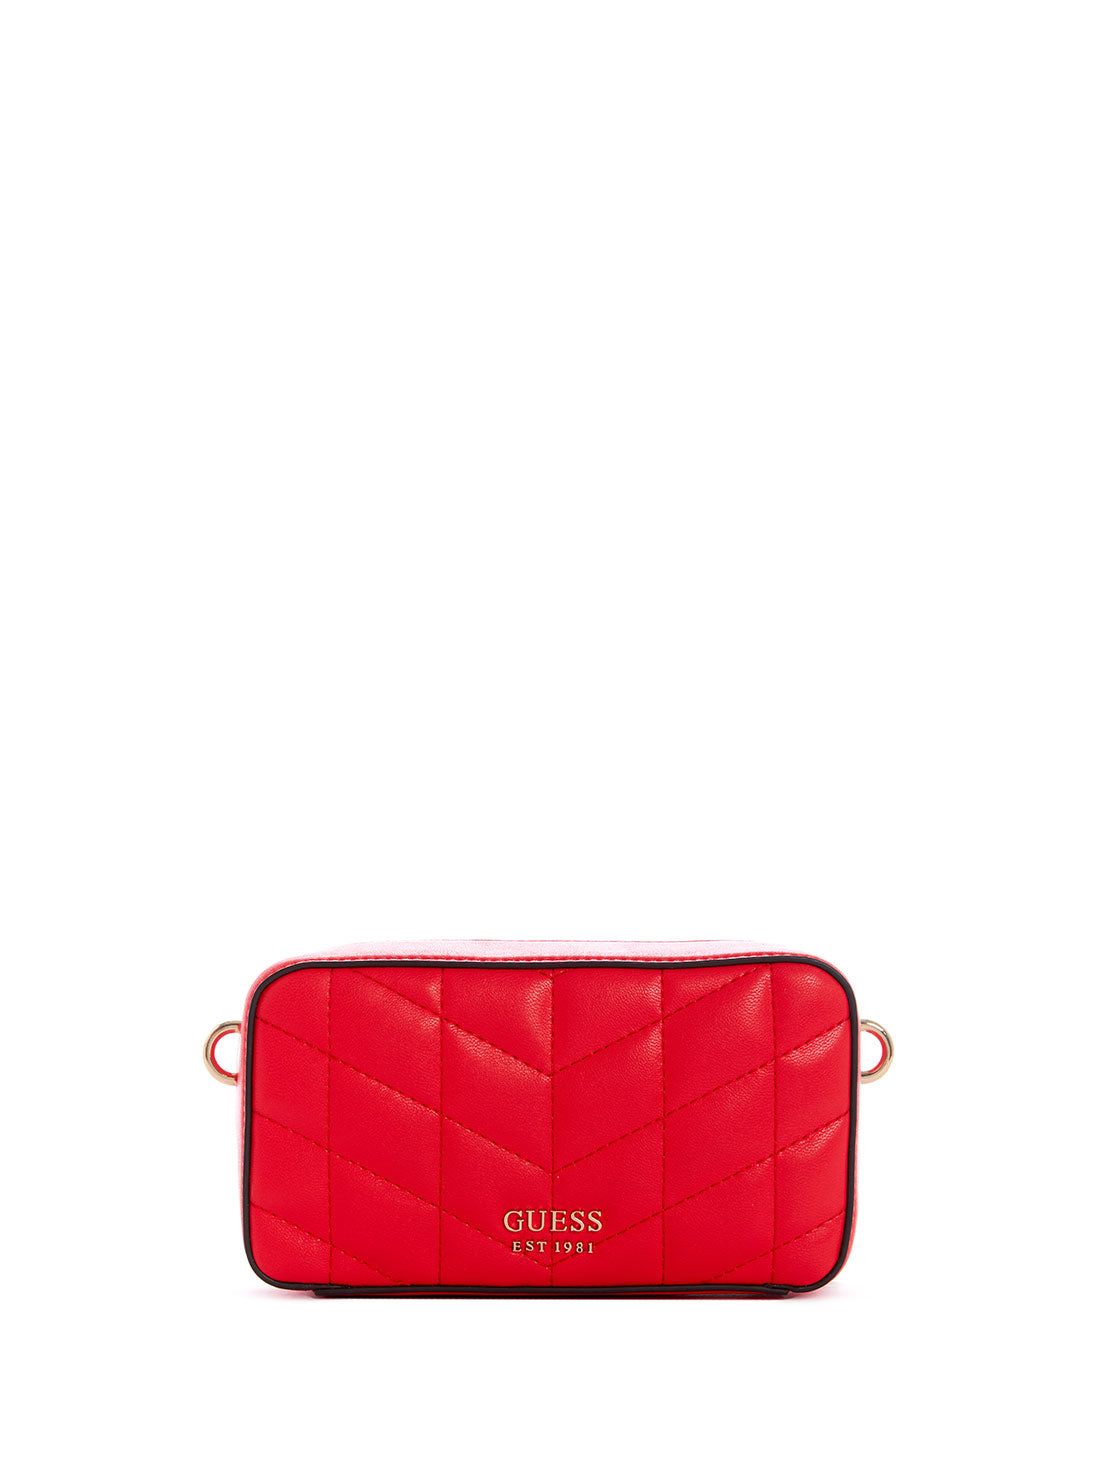 GUESS Women's Red Brera Studded Mini Crossbody Camera Bag QG840472 Back View